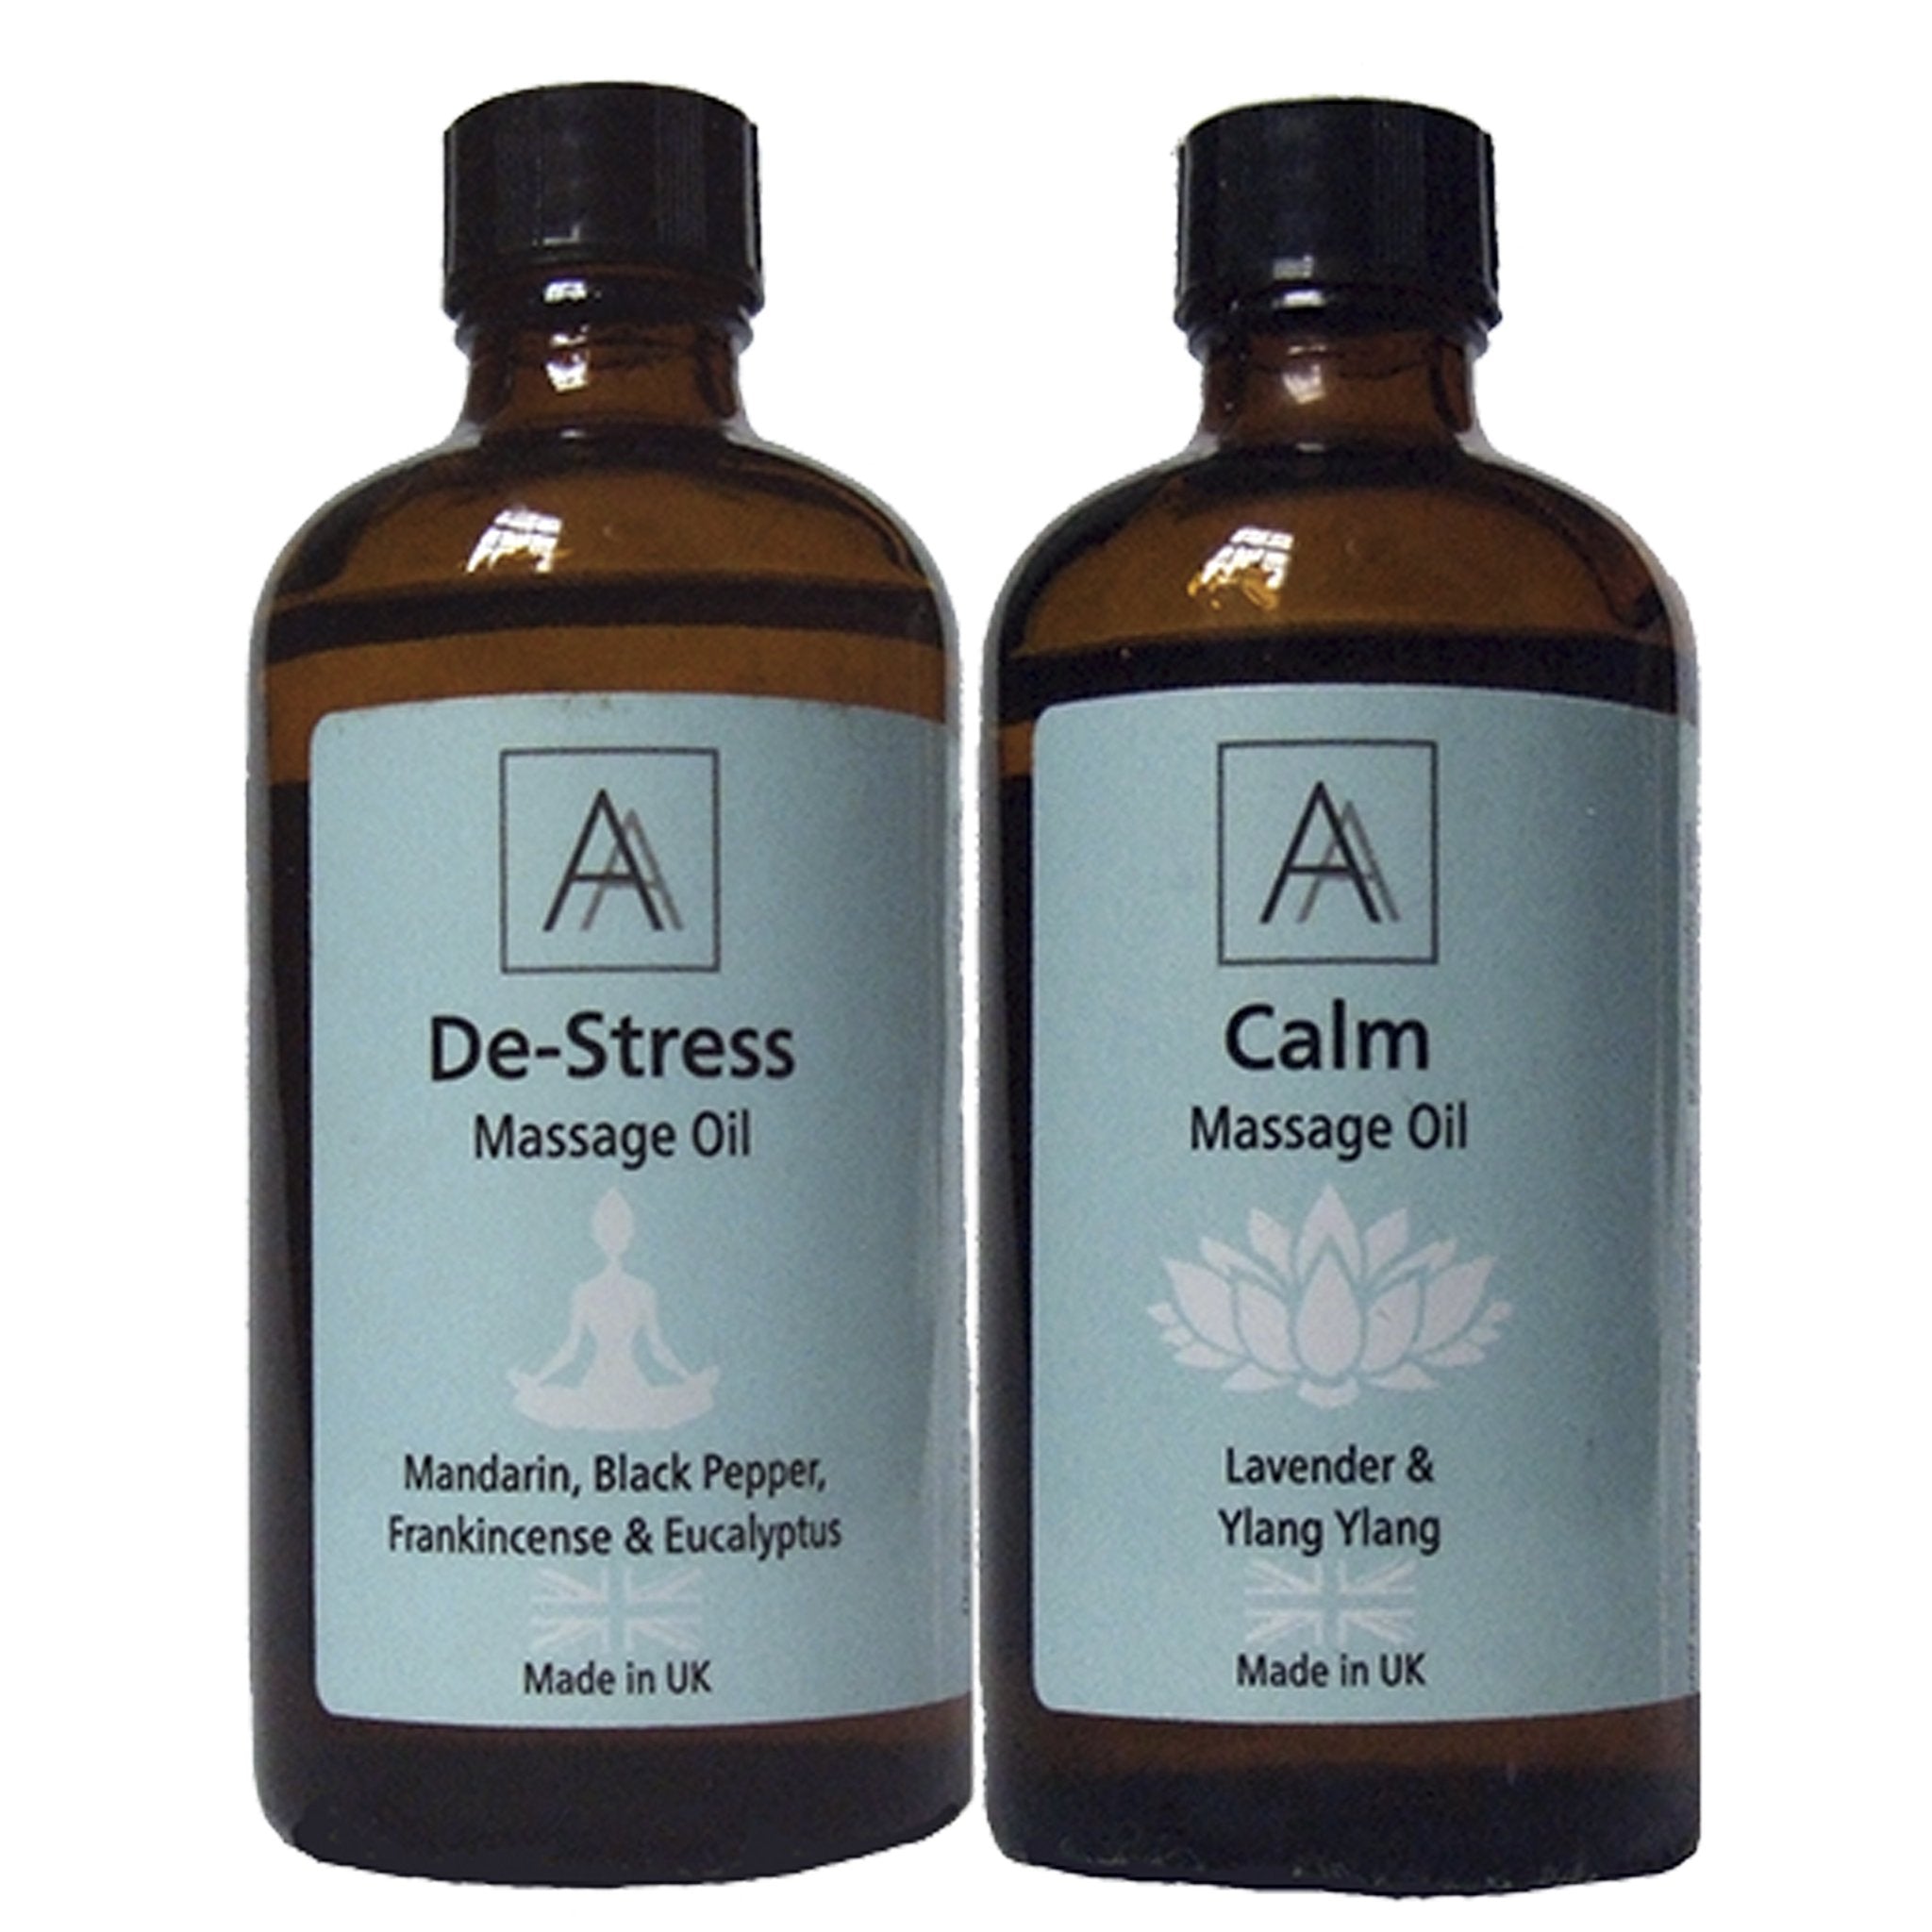 De-stress and Calm Massage Oil's